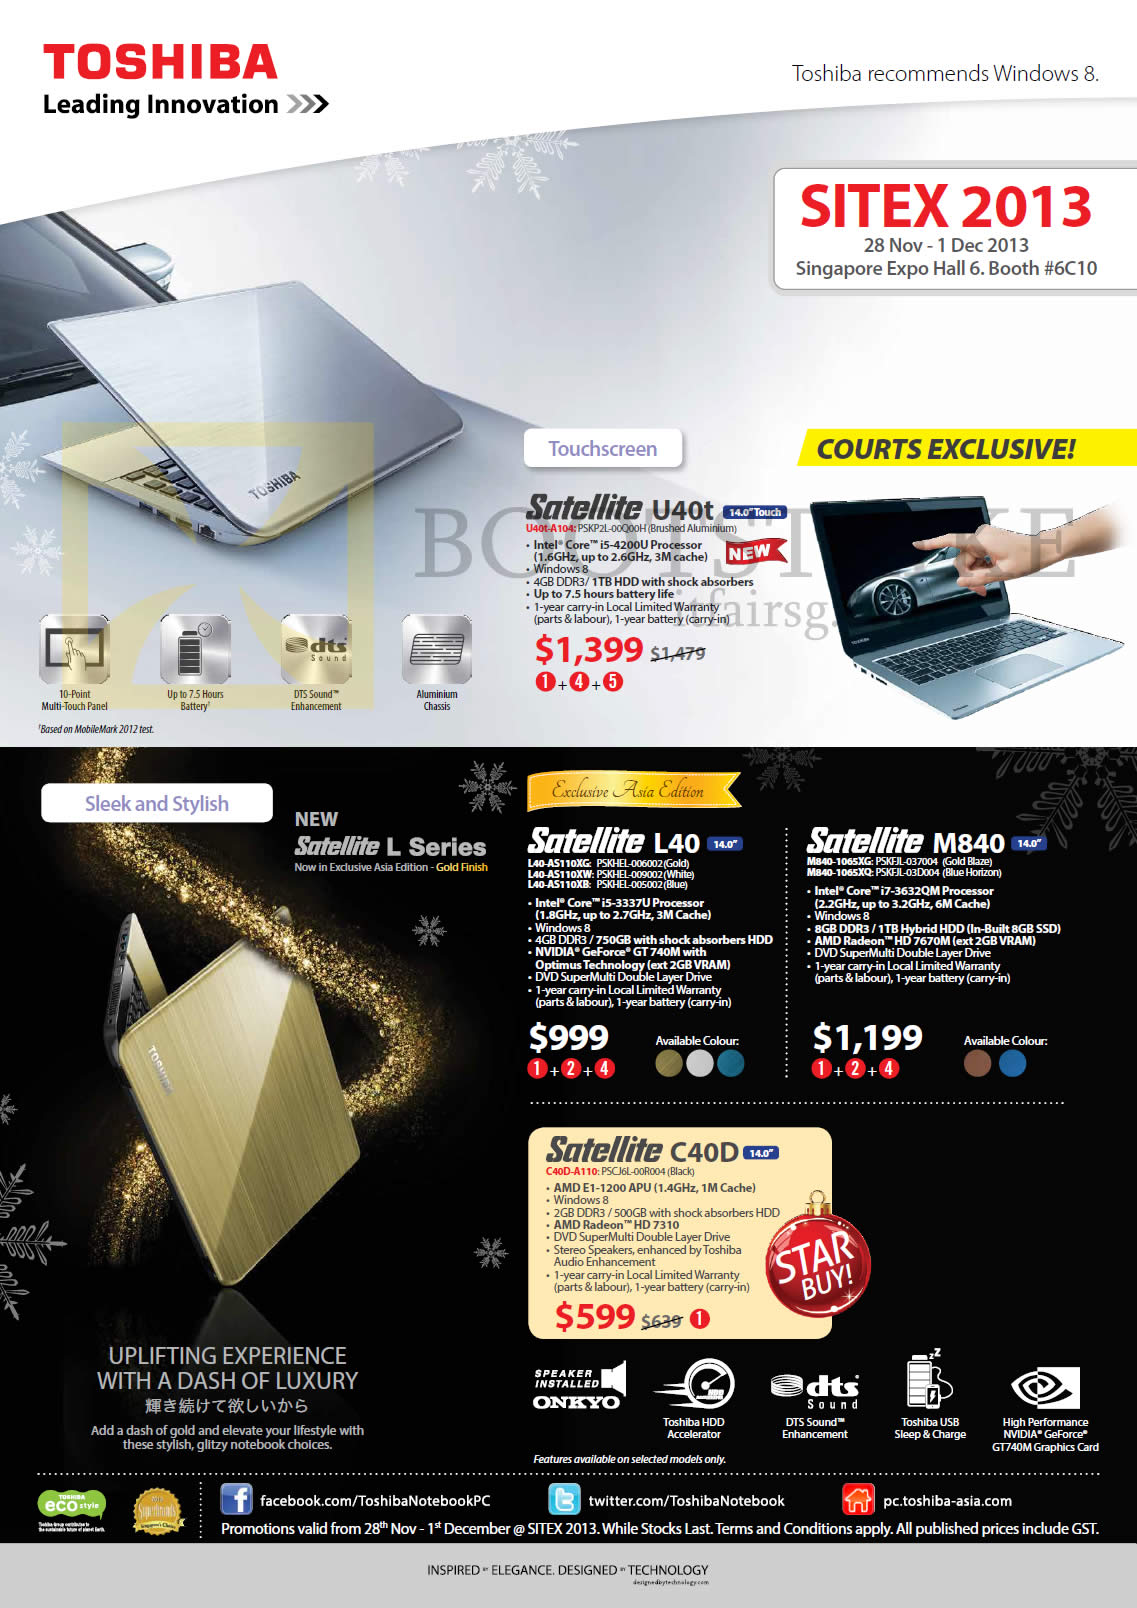 SITEX 2013 price list image brochure of Toshiba Notebooks Satellite U40t, L40, M840, C40D